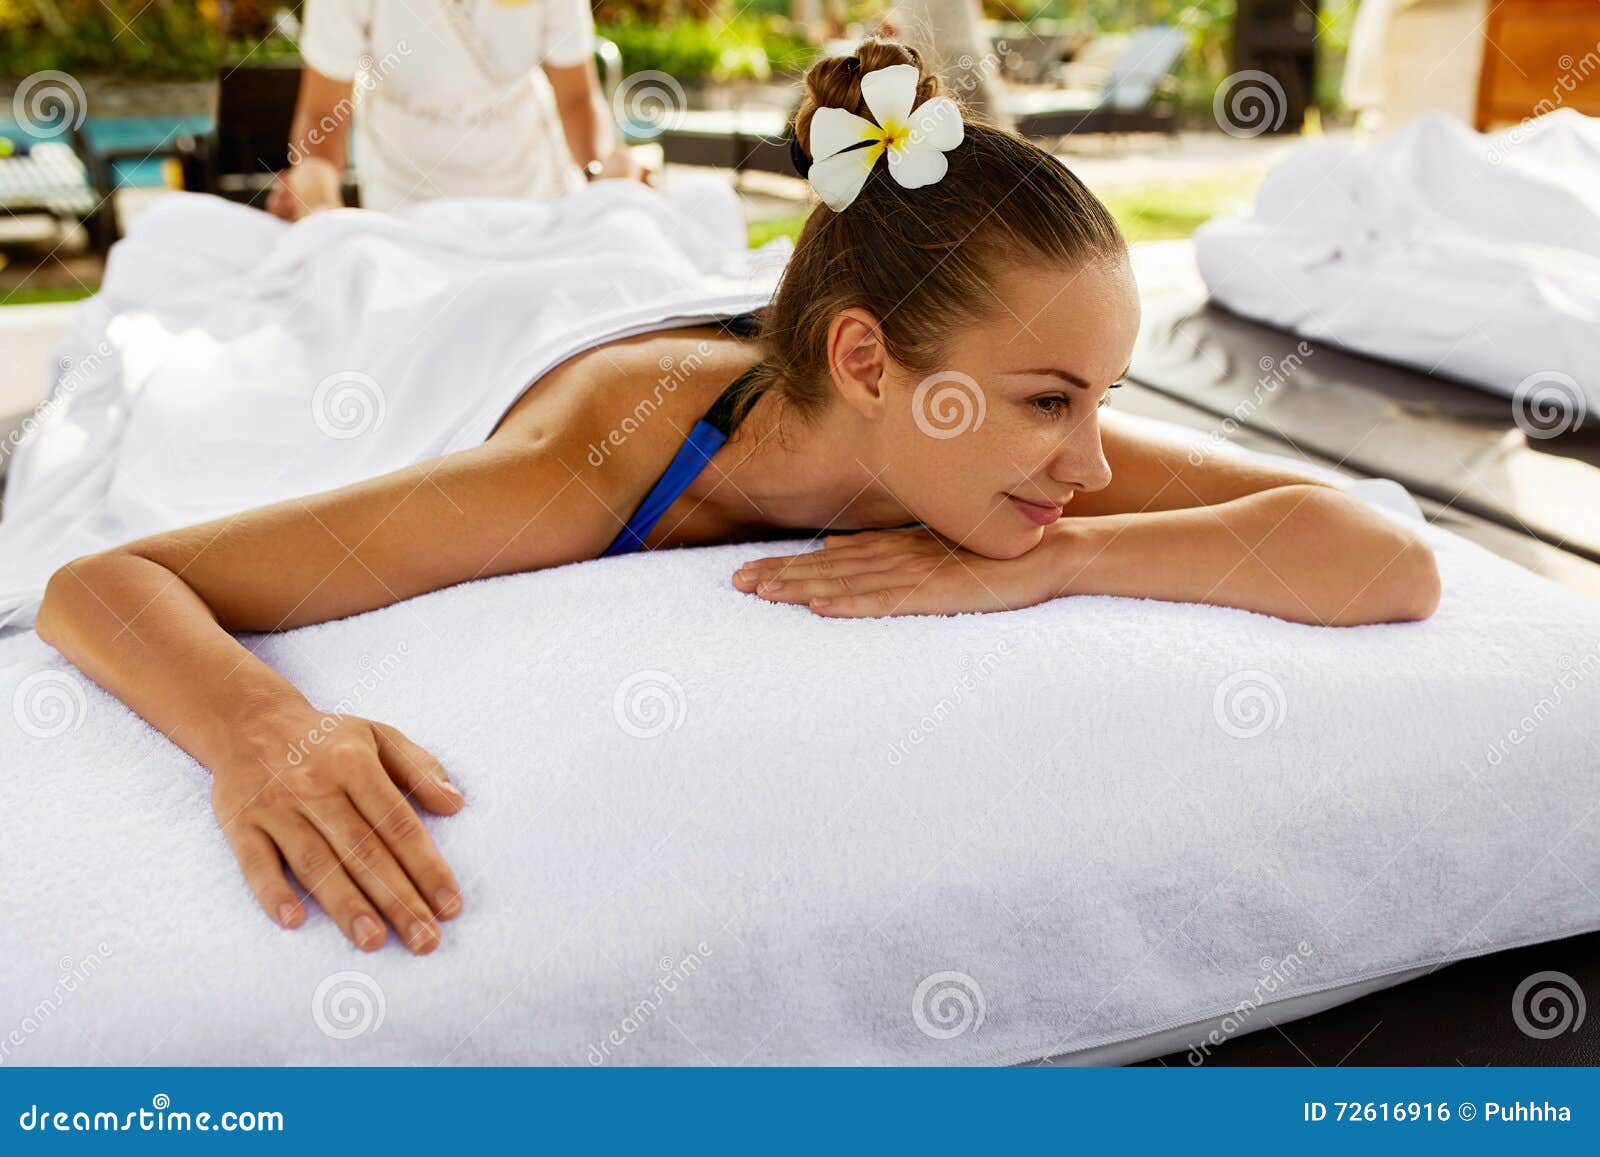 Spa Concept Towels Oils Body Scrub Pamper Beauty Wellness Hygiene Stock  Photo - Image of salon, scrub: 108379684